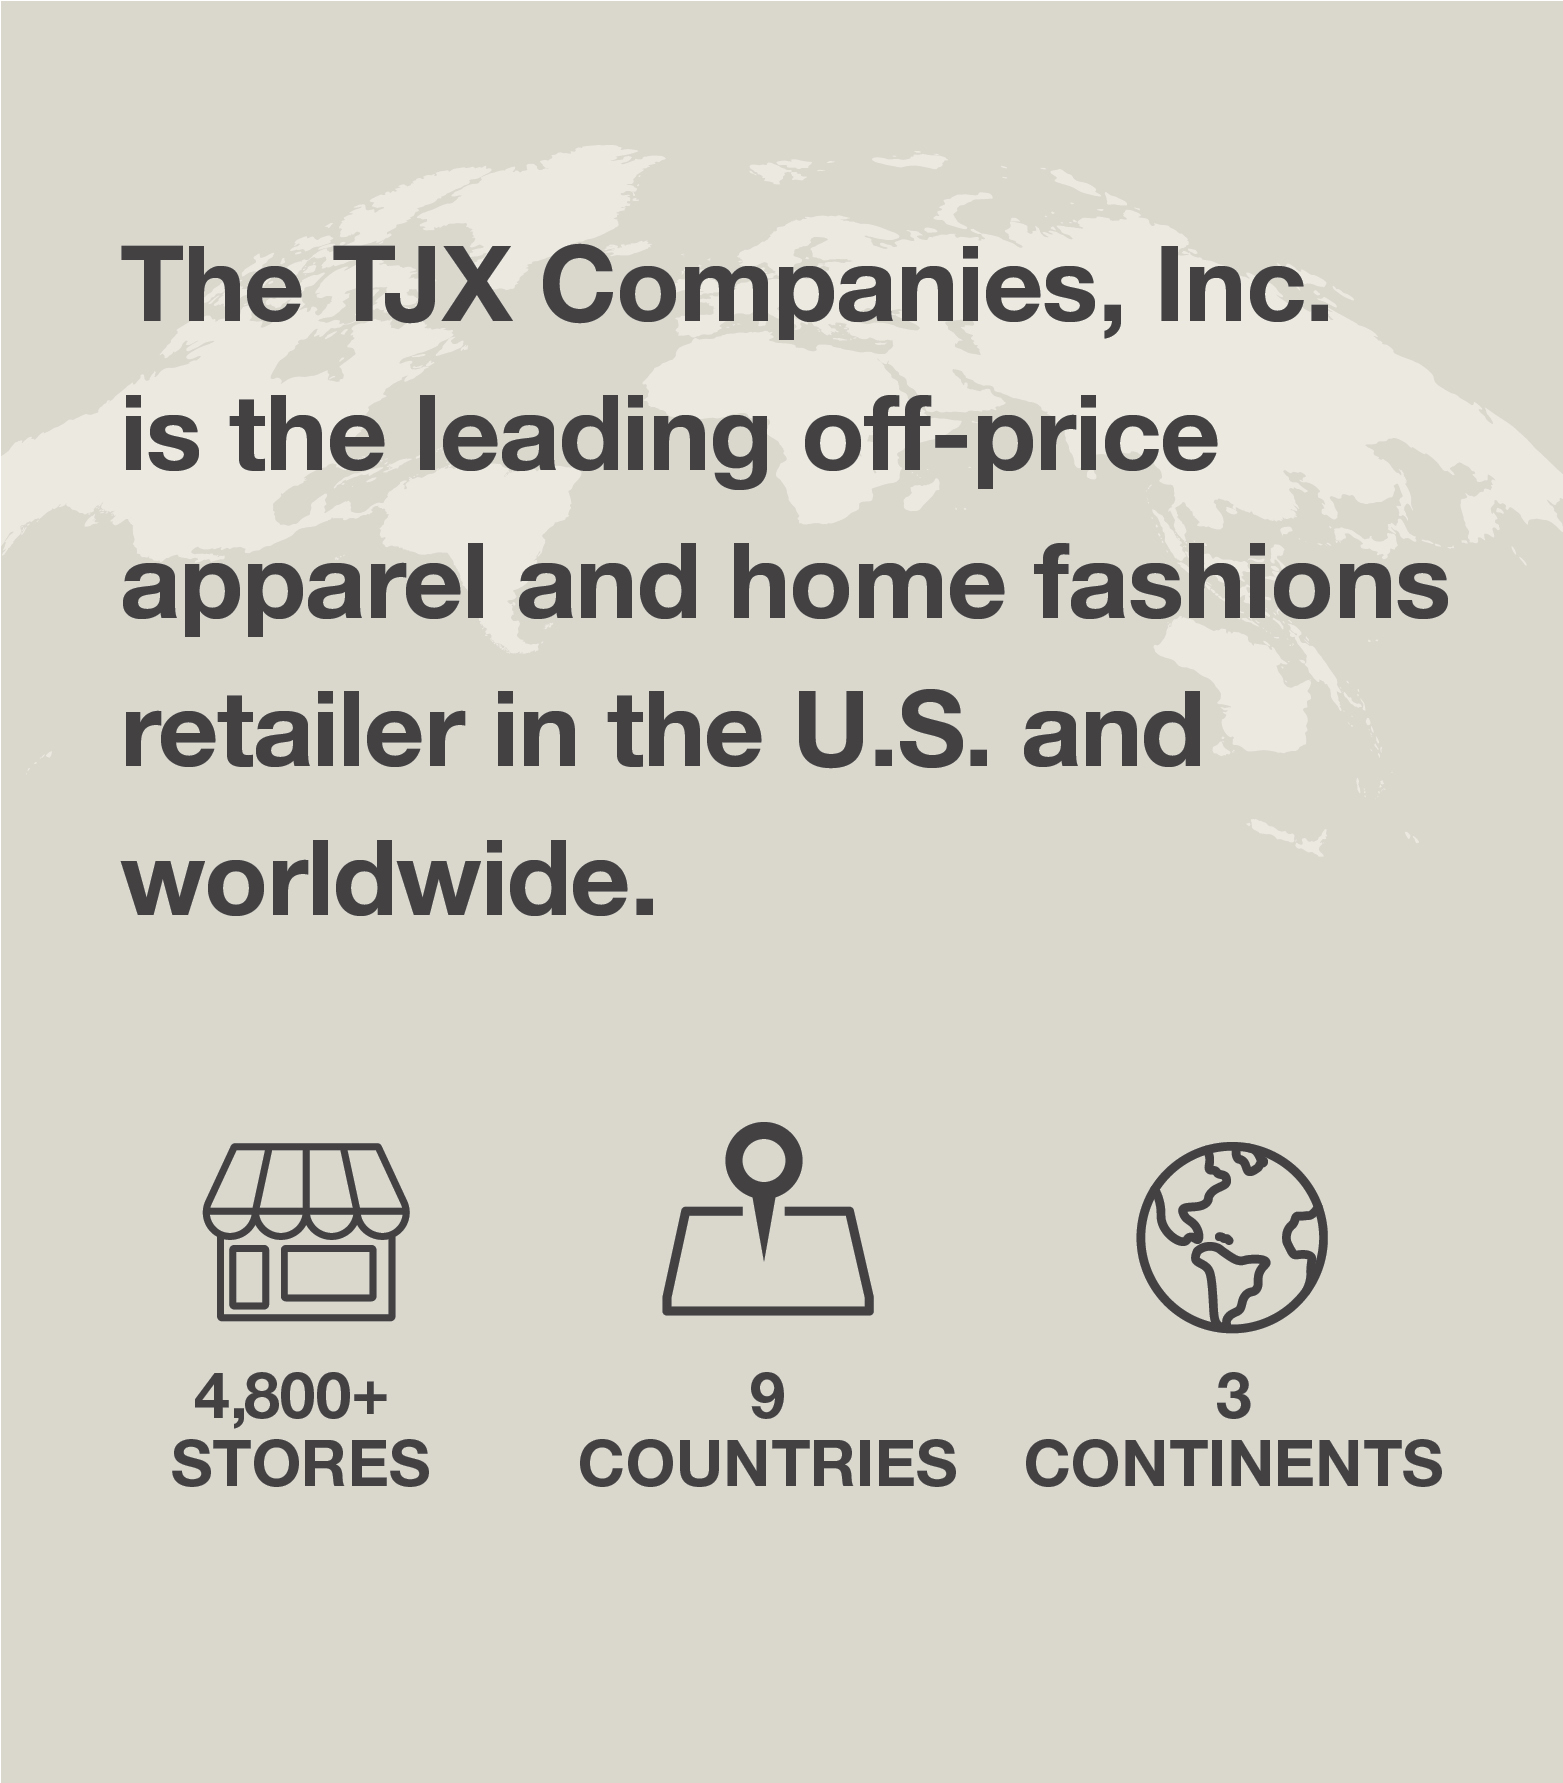 TJ Maxx store locations in the USA